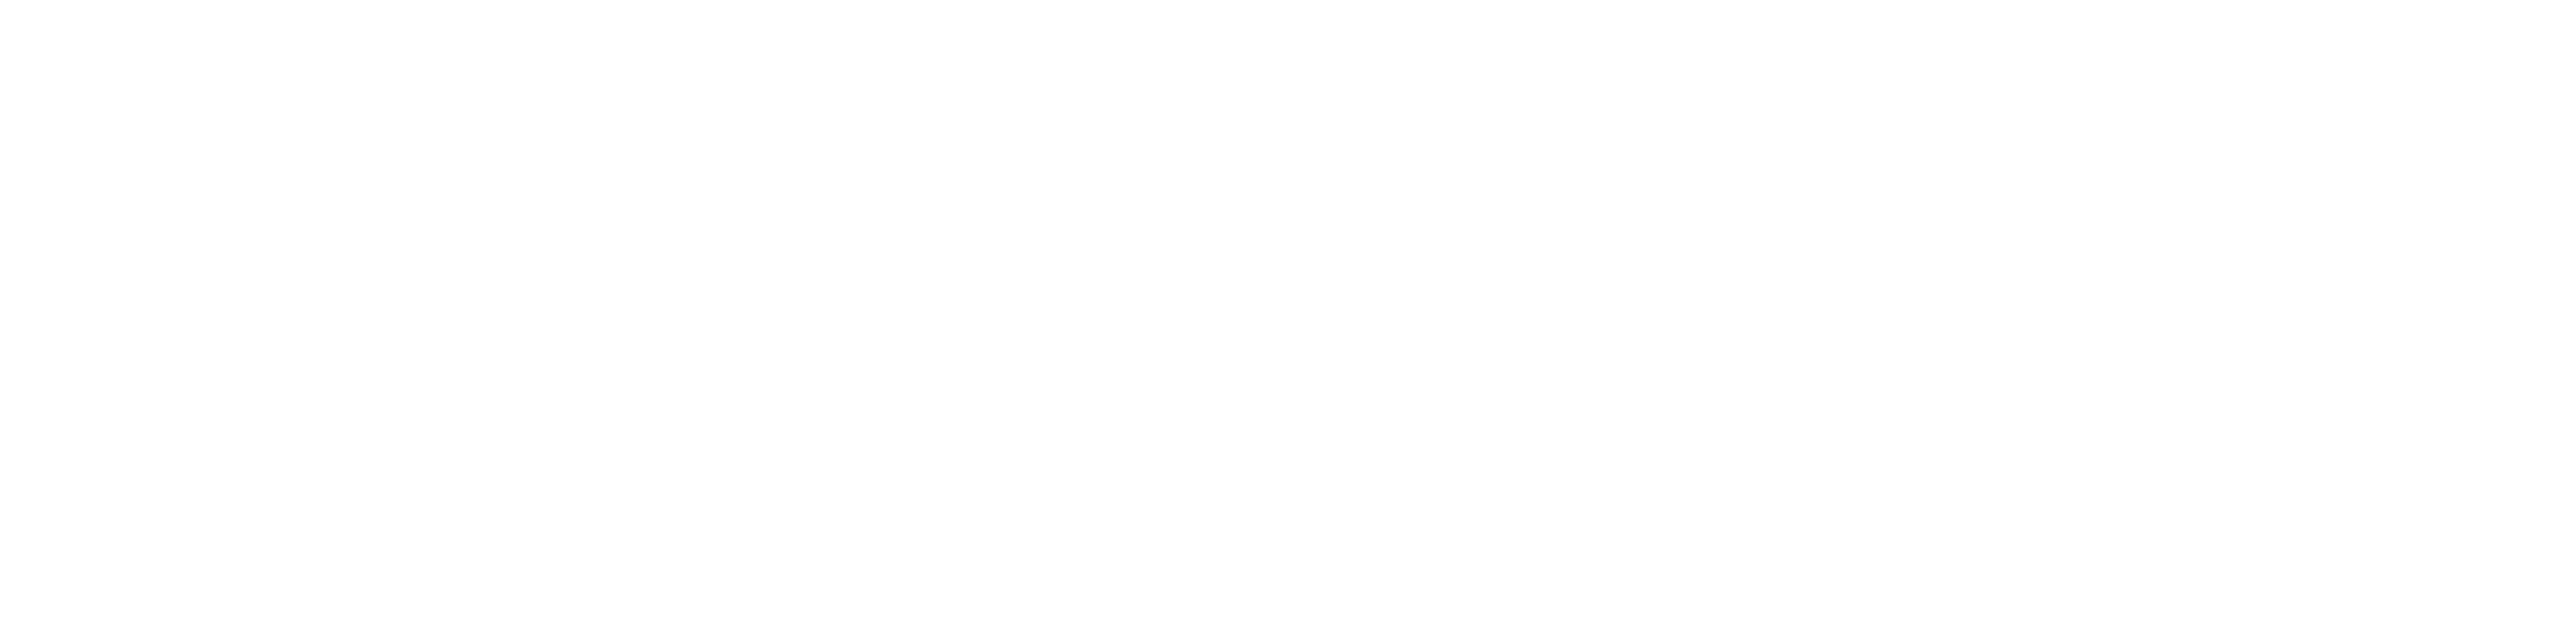 Gehan Homes logo with tagline